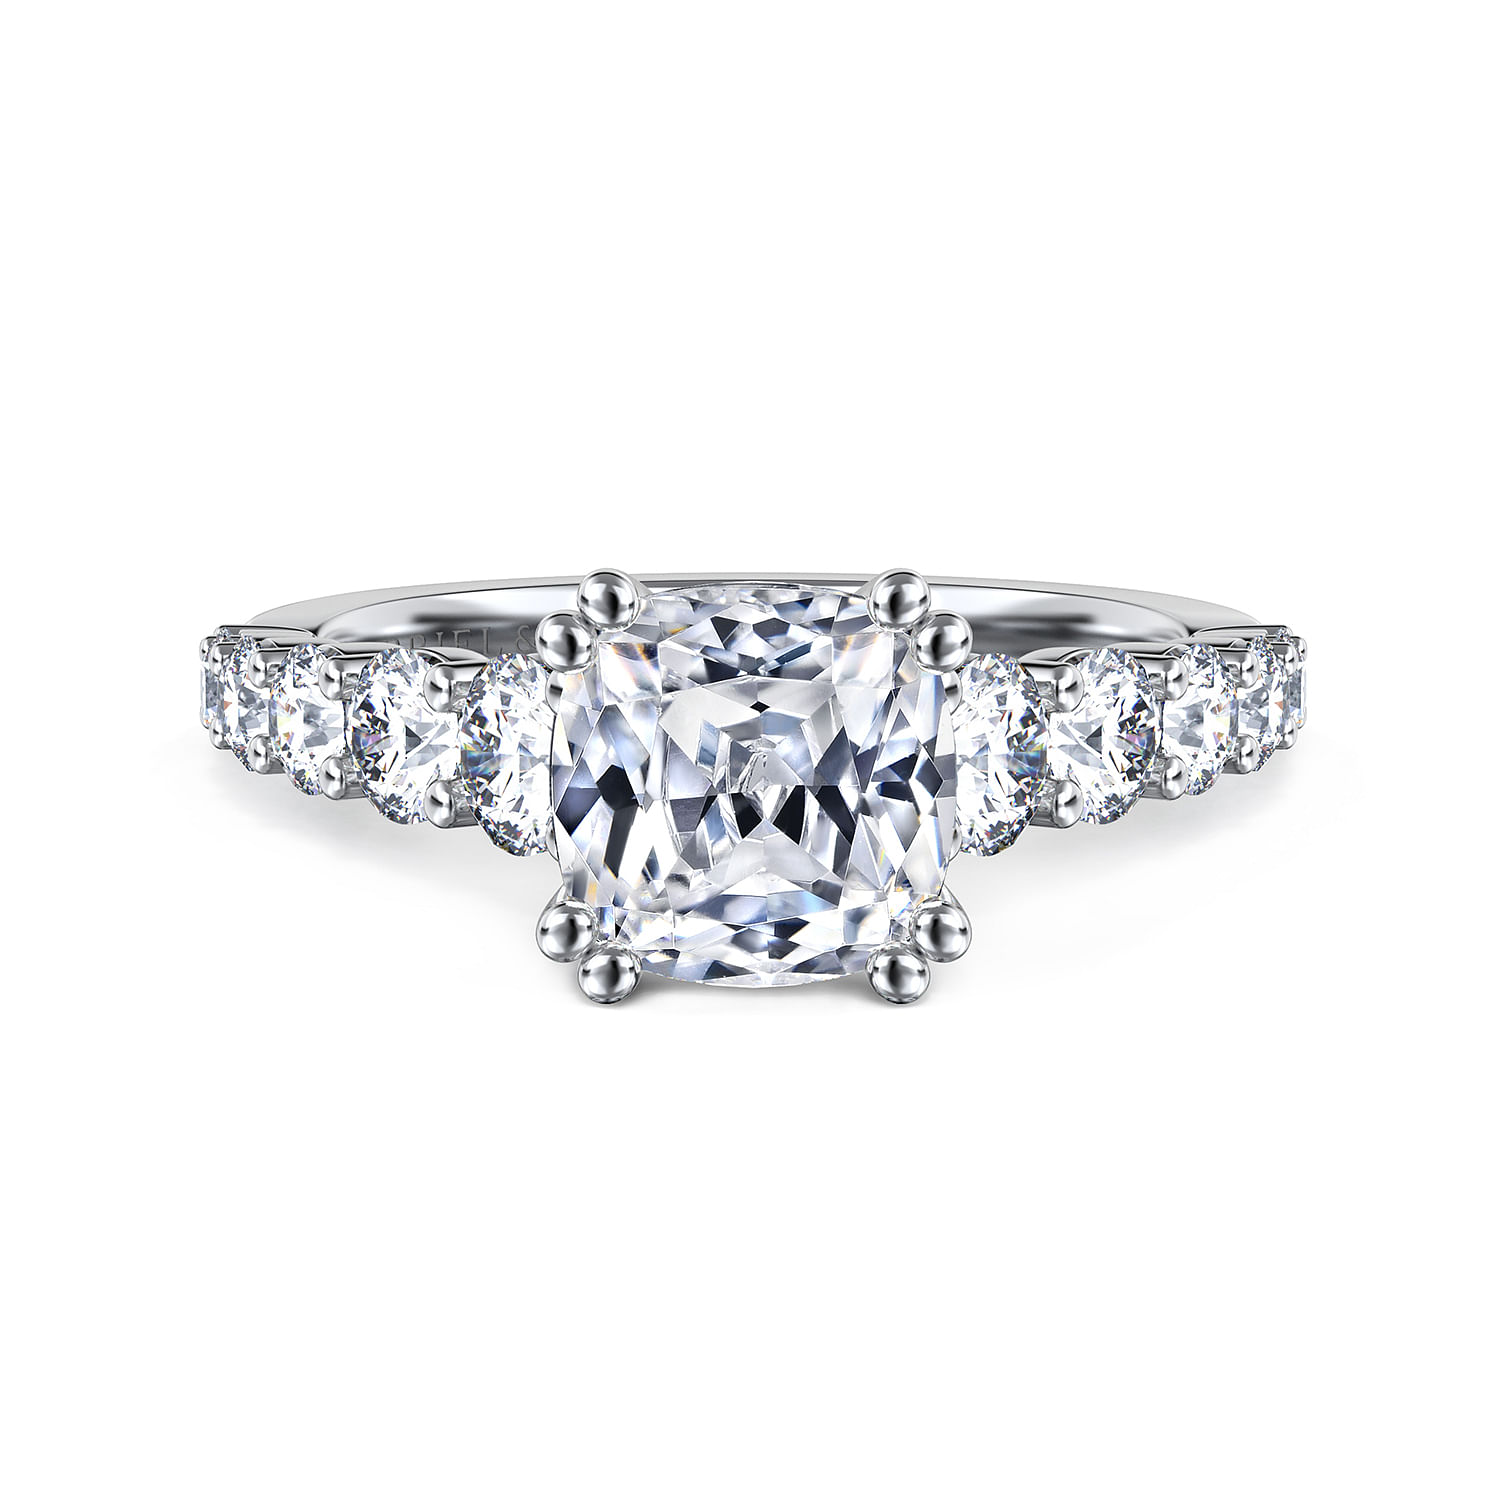 Taylor - 14K White Gold Cushion Cut Diamond Engagement Ring